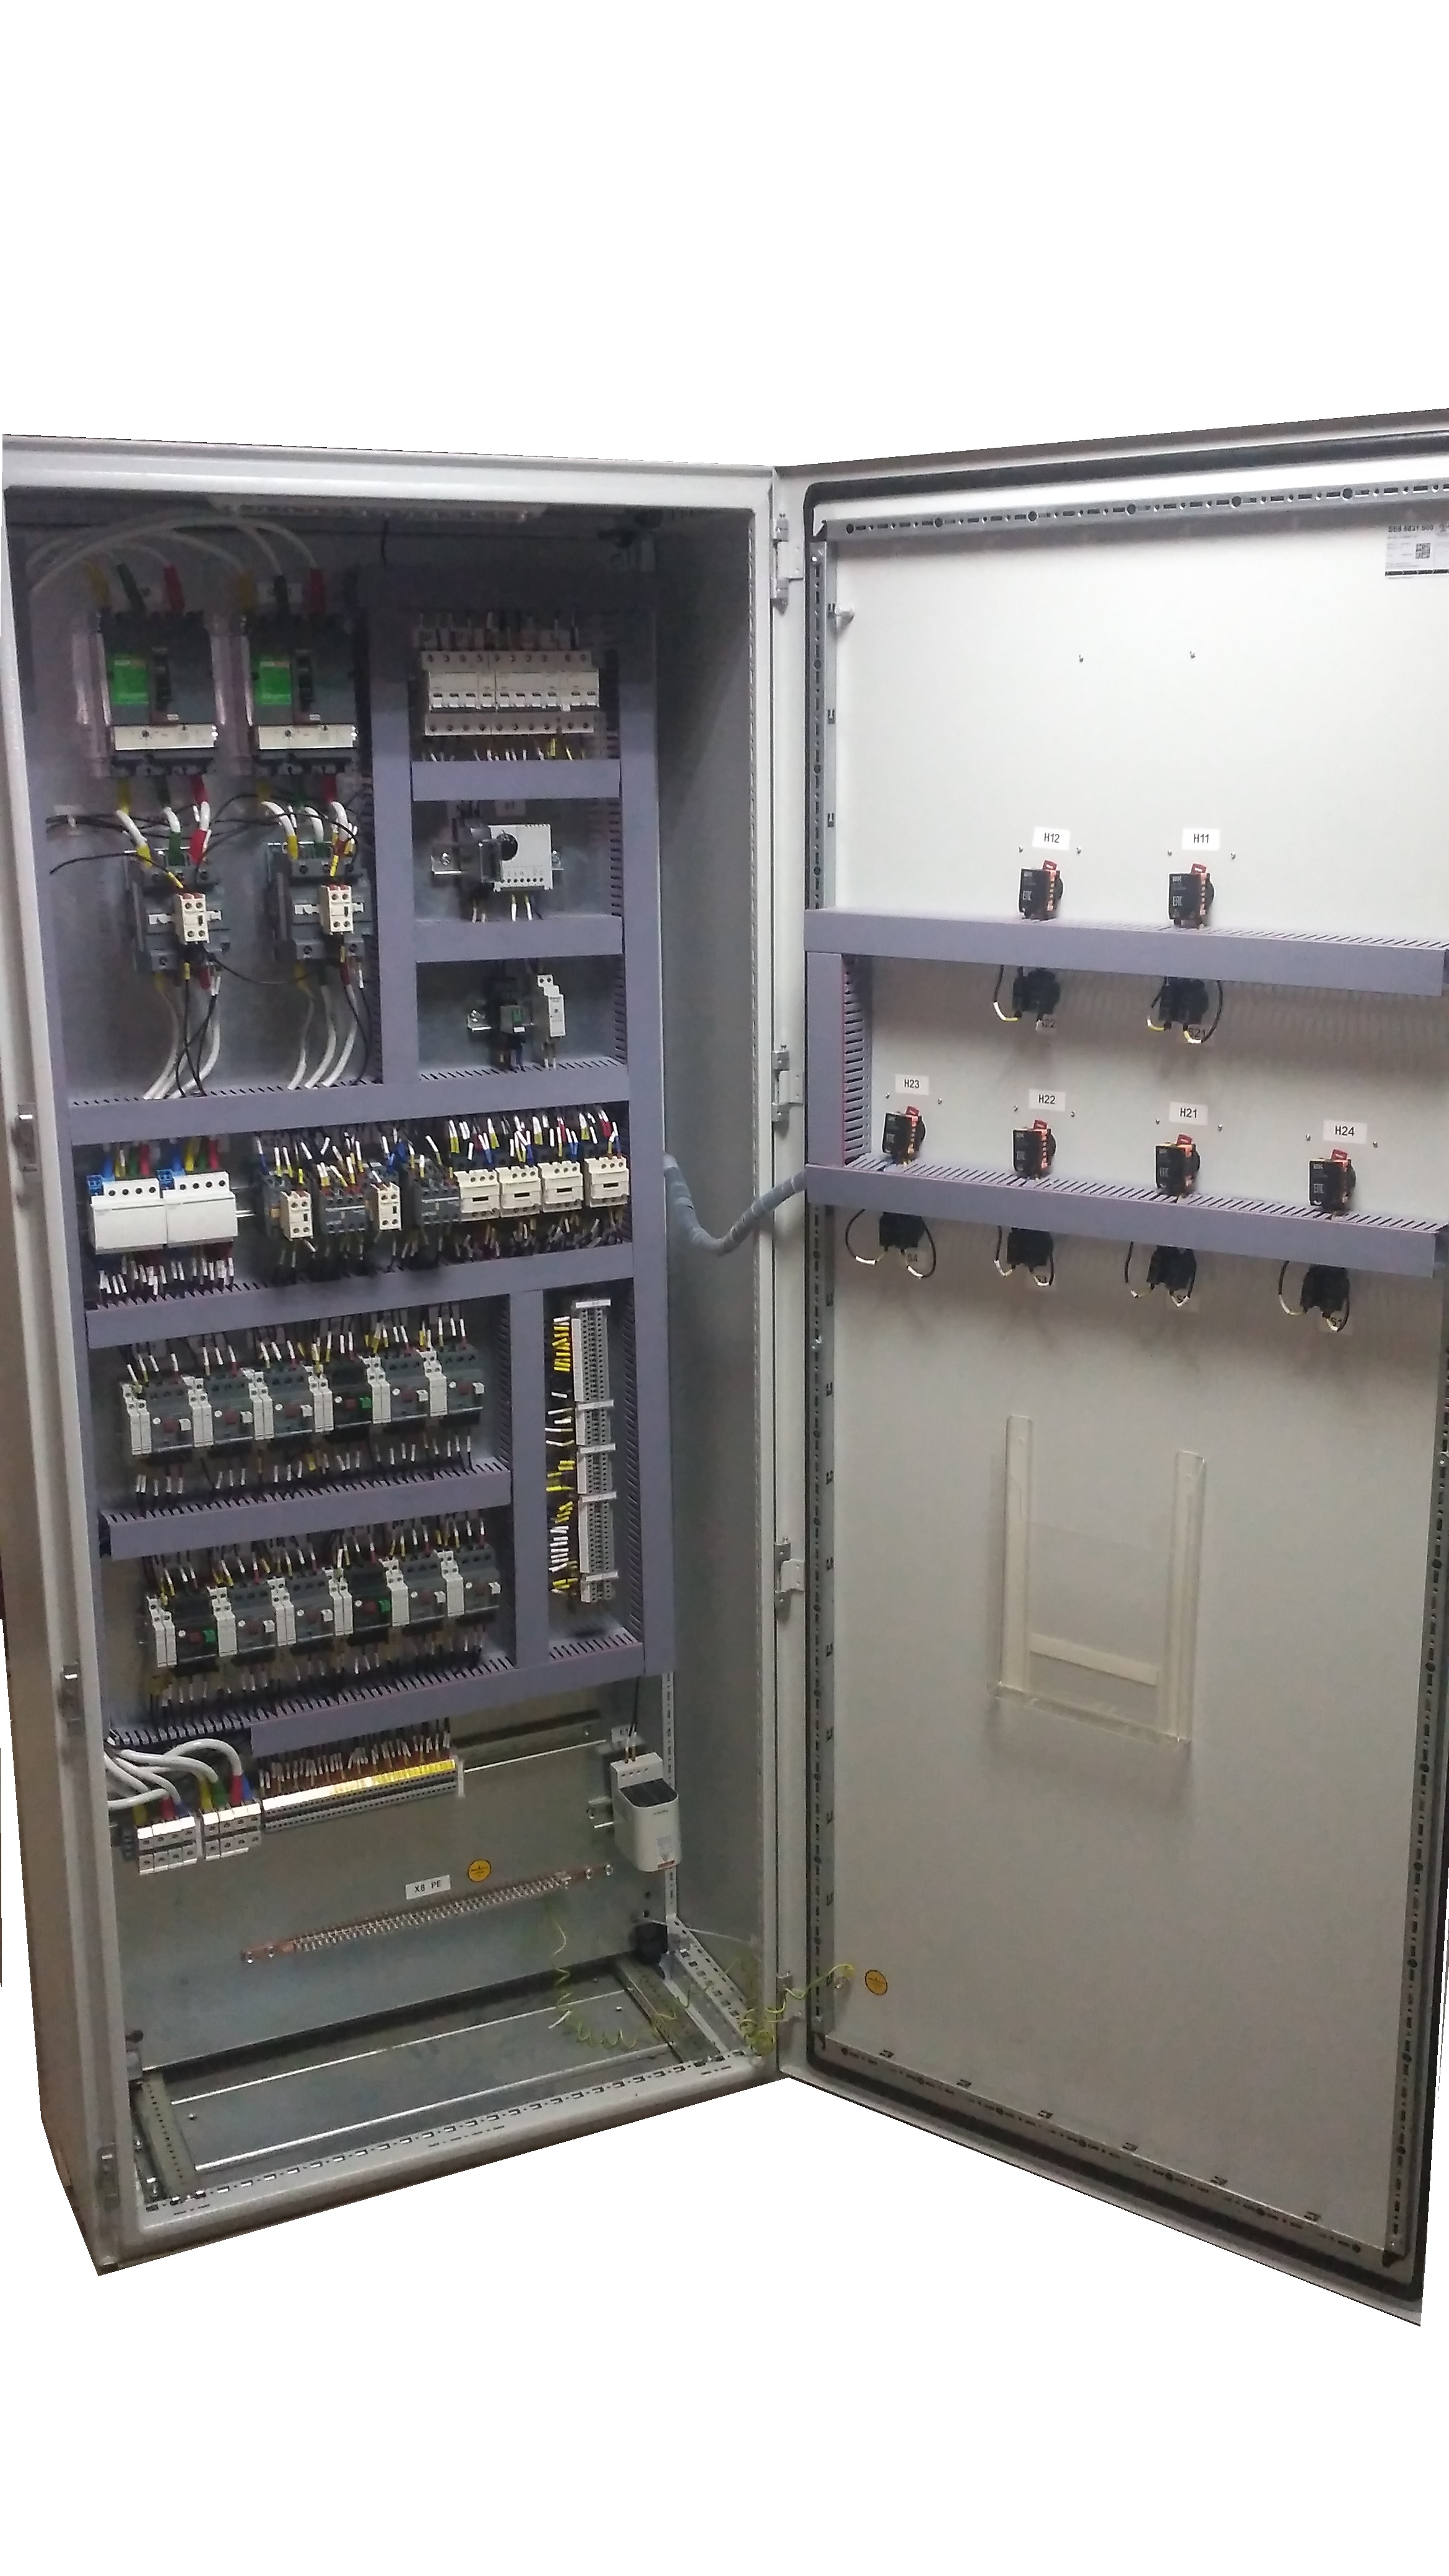 Шкаф автоматического управления обдува трансформатора шаот для управления со типа д